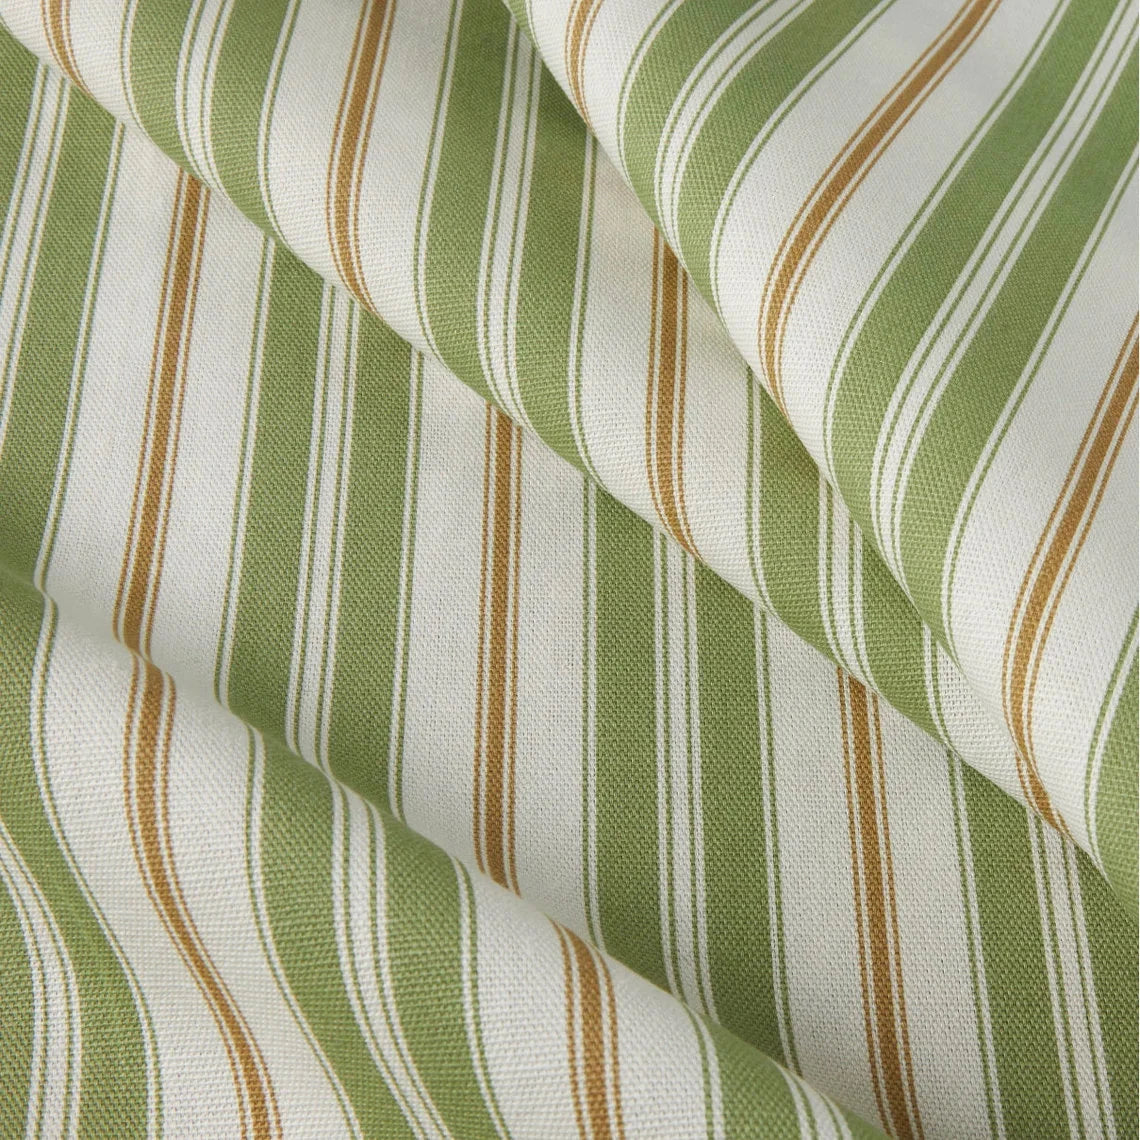 tailored bedskirt in newbury aloe green stripe- green, brown, white